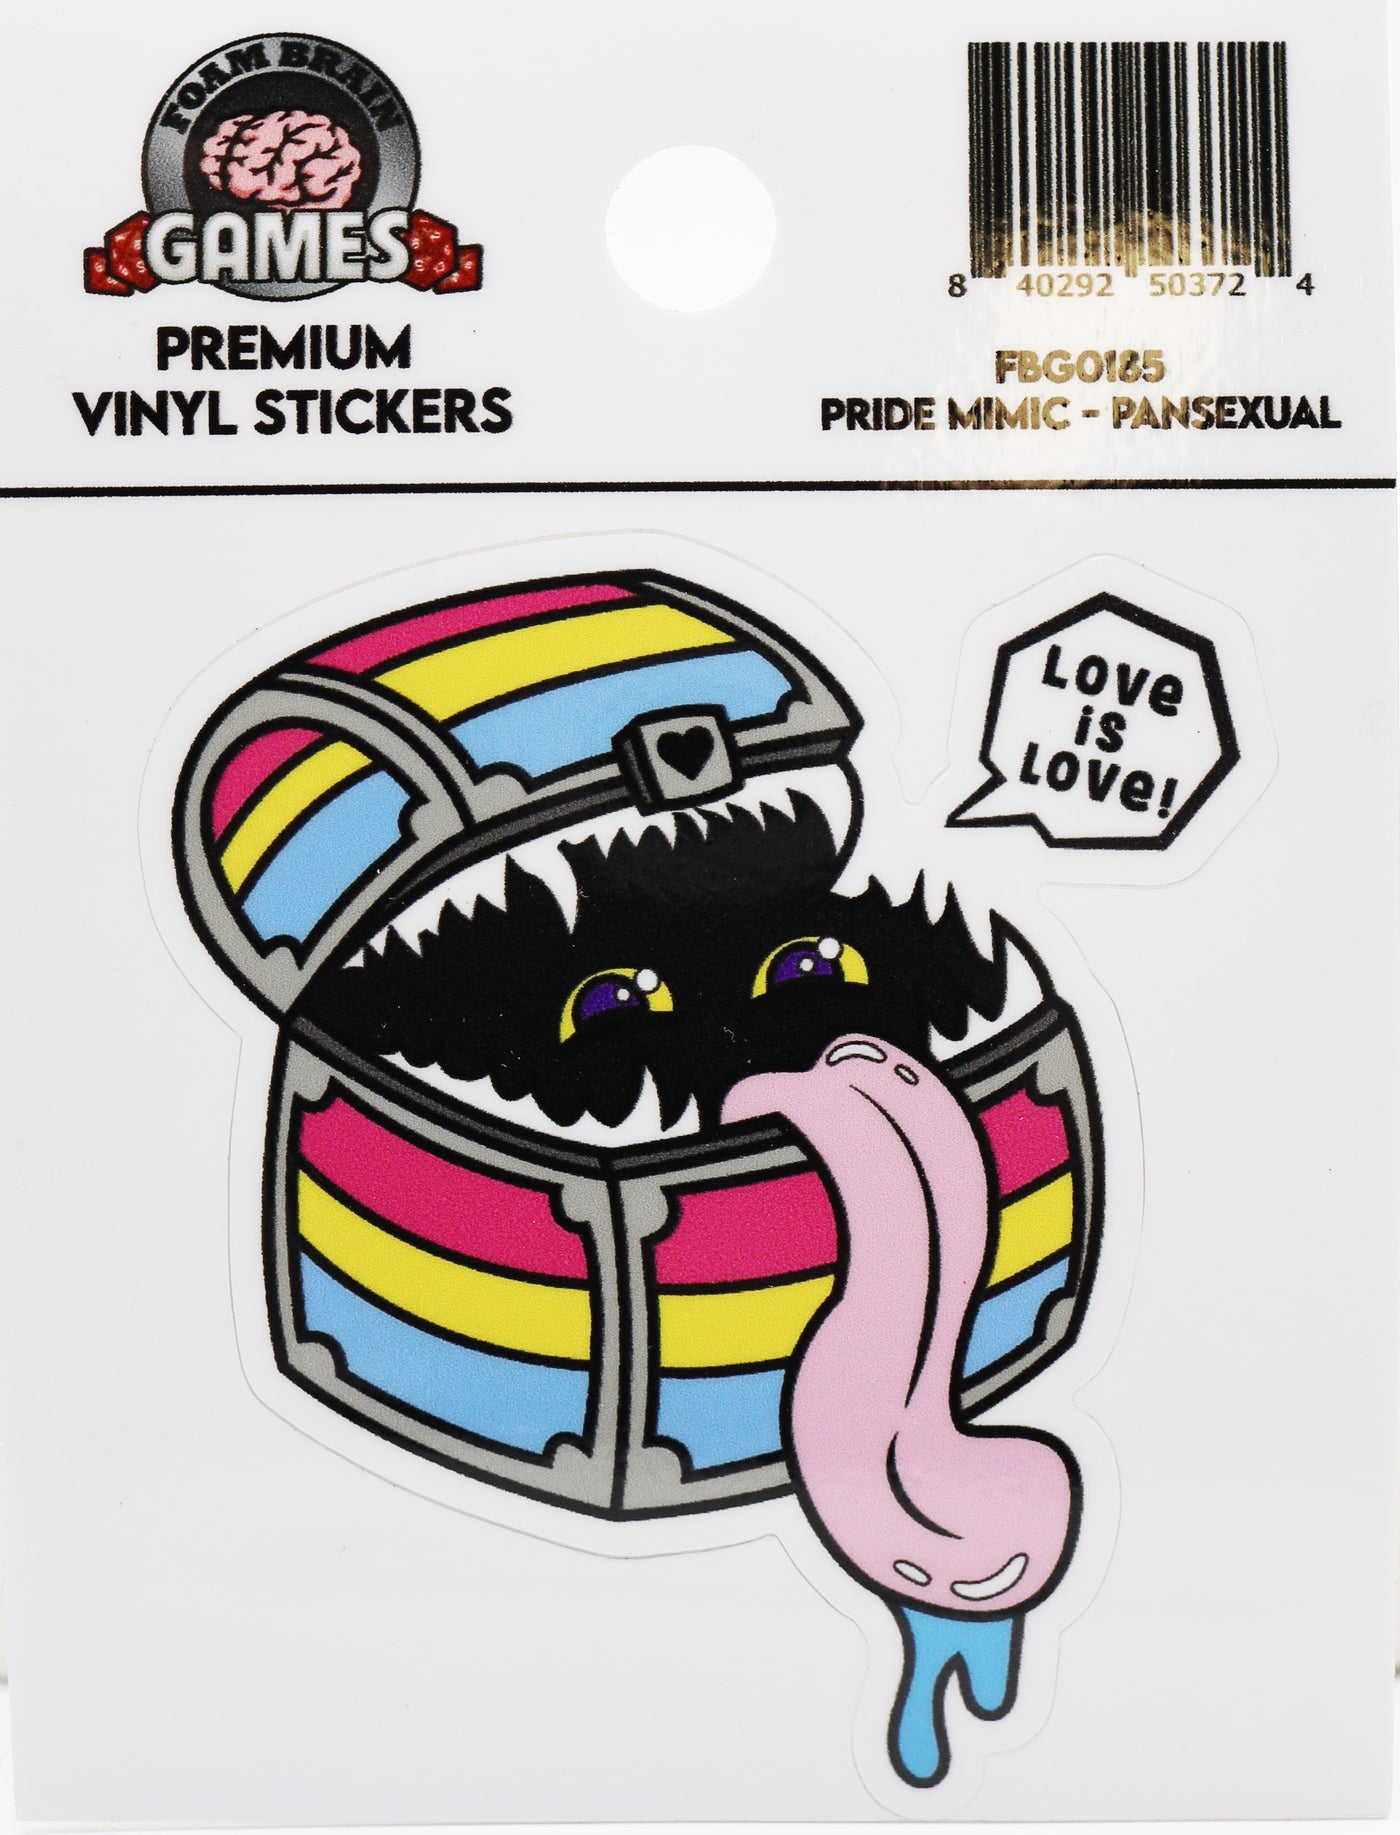 Pride Mimic Sticker: Pansexual Stickers Foam Brain Games